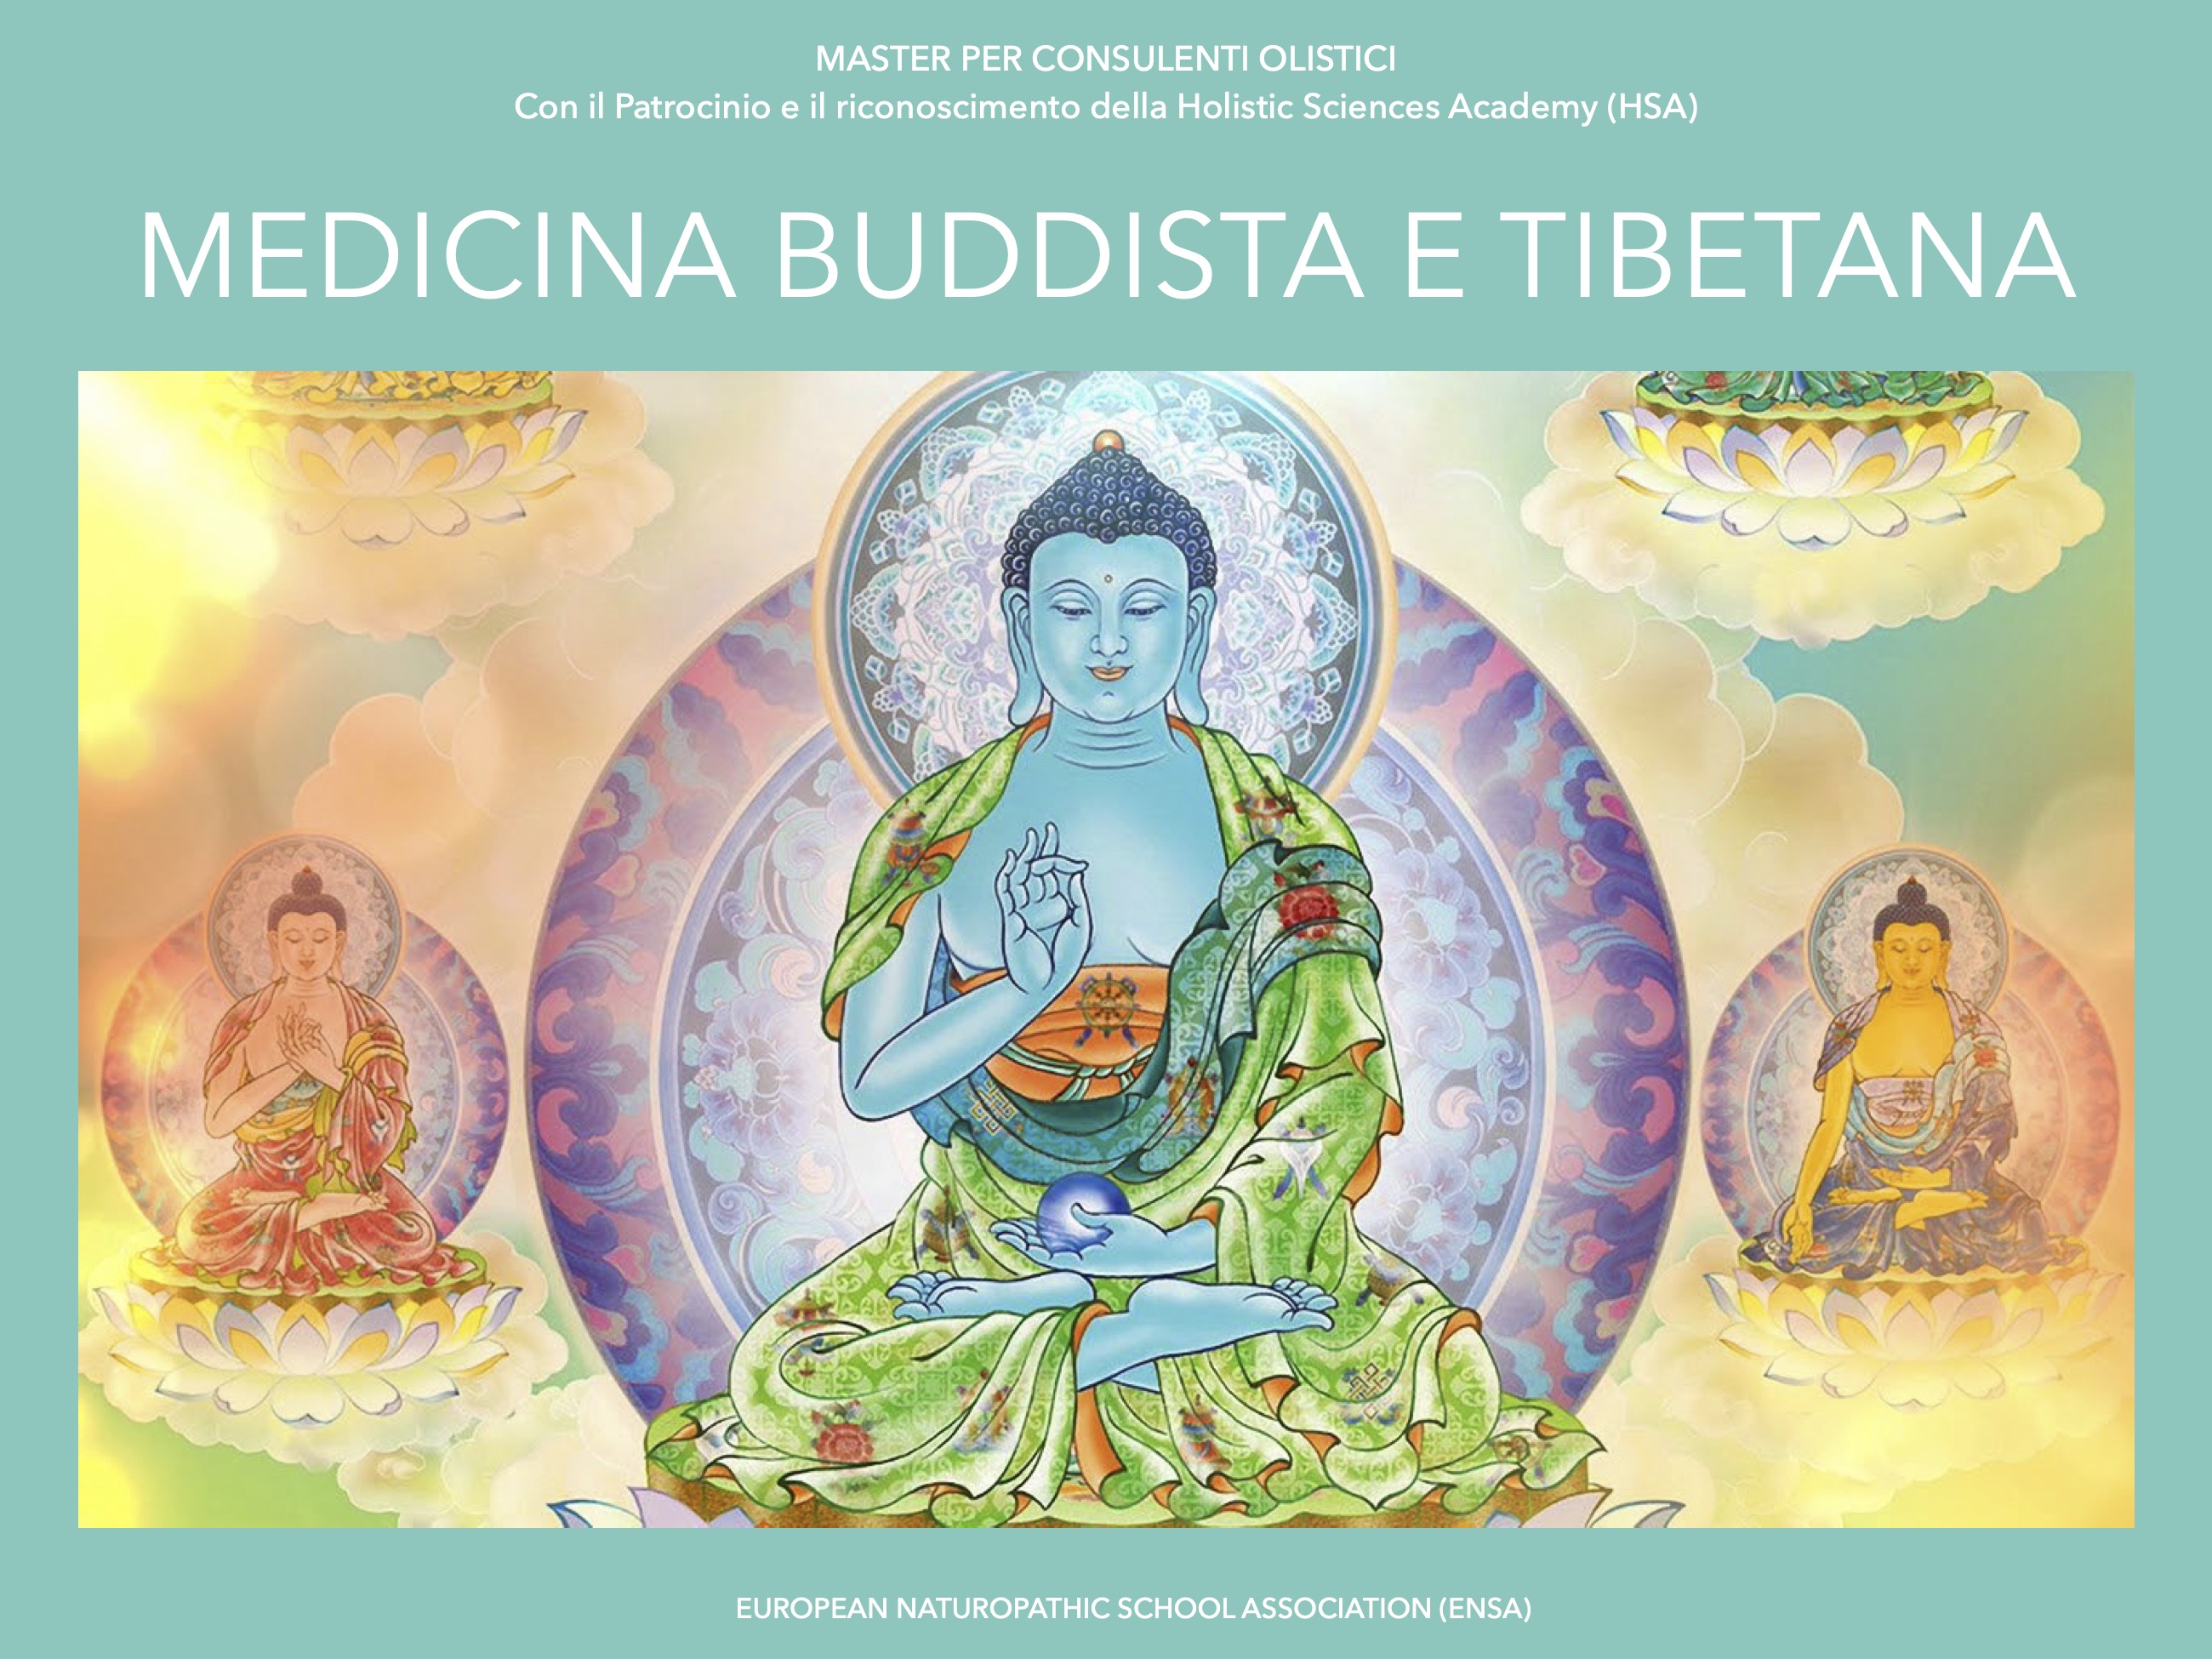 Medicina buddista tibetana